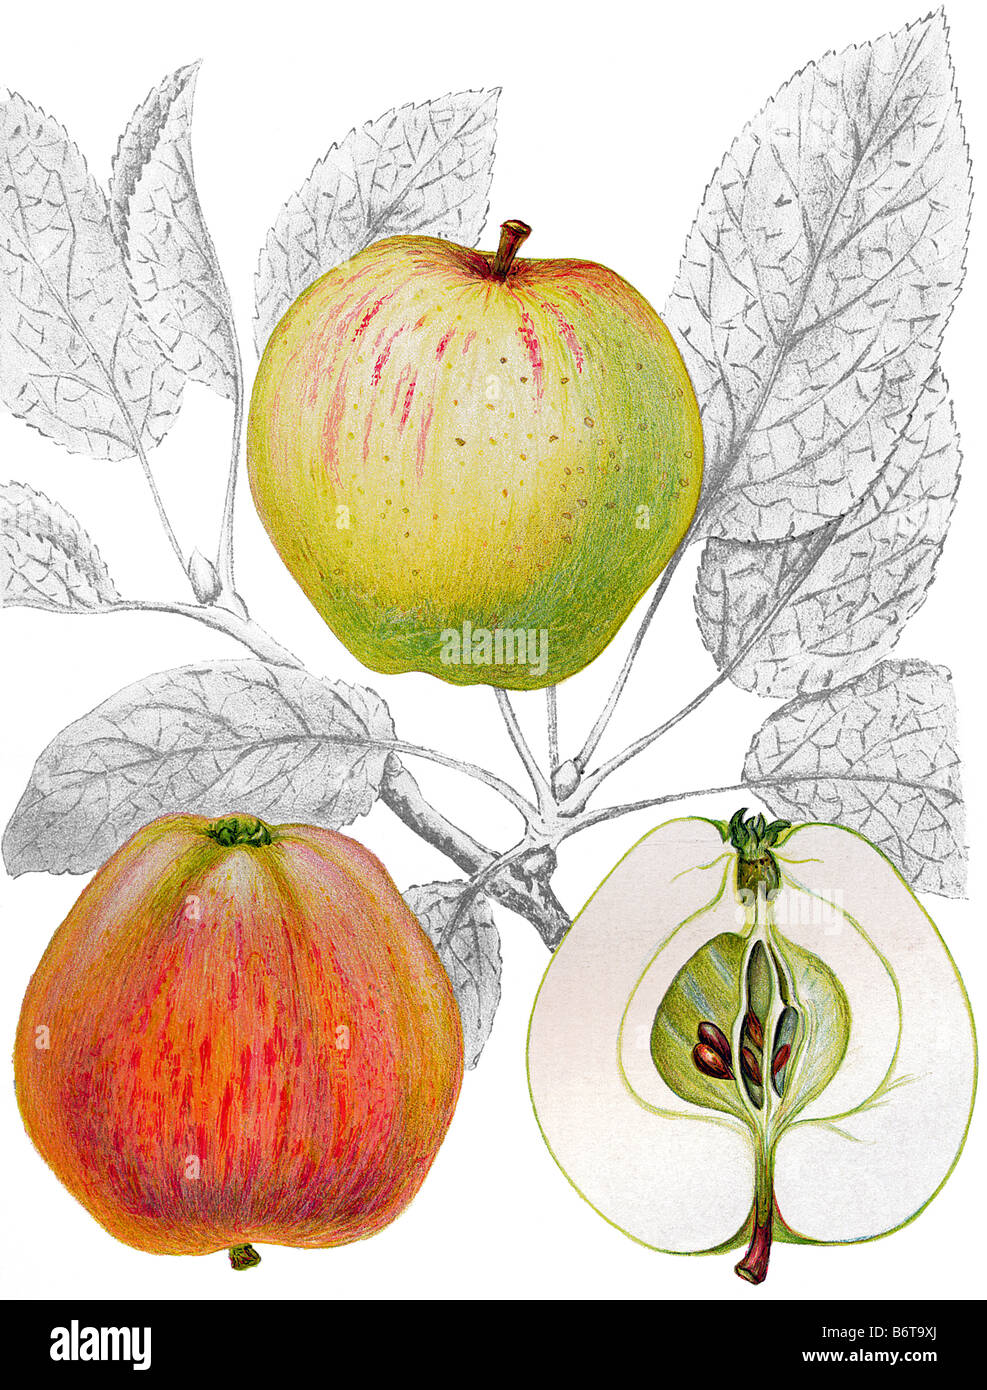 Illustration of the apple 'sparreholmsäpple' Stock Photo